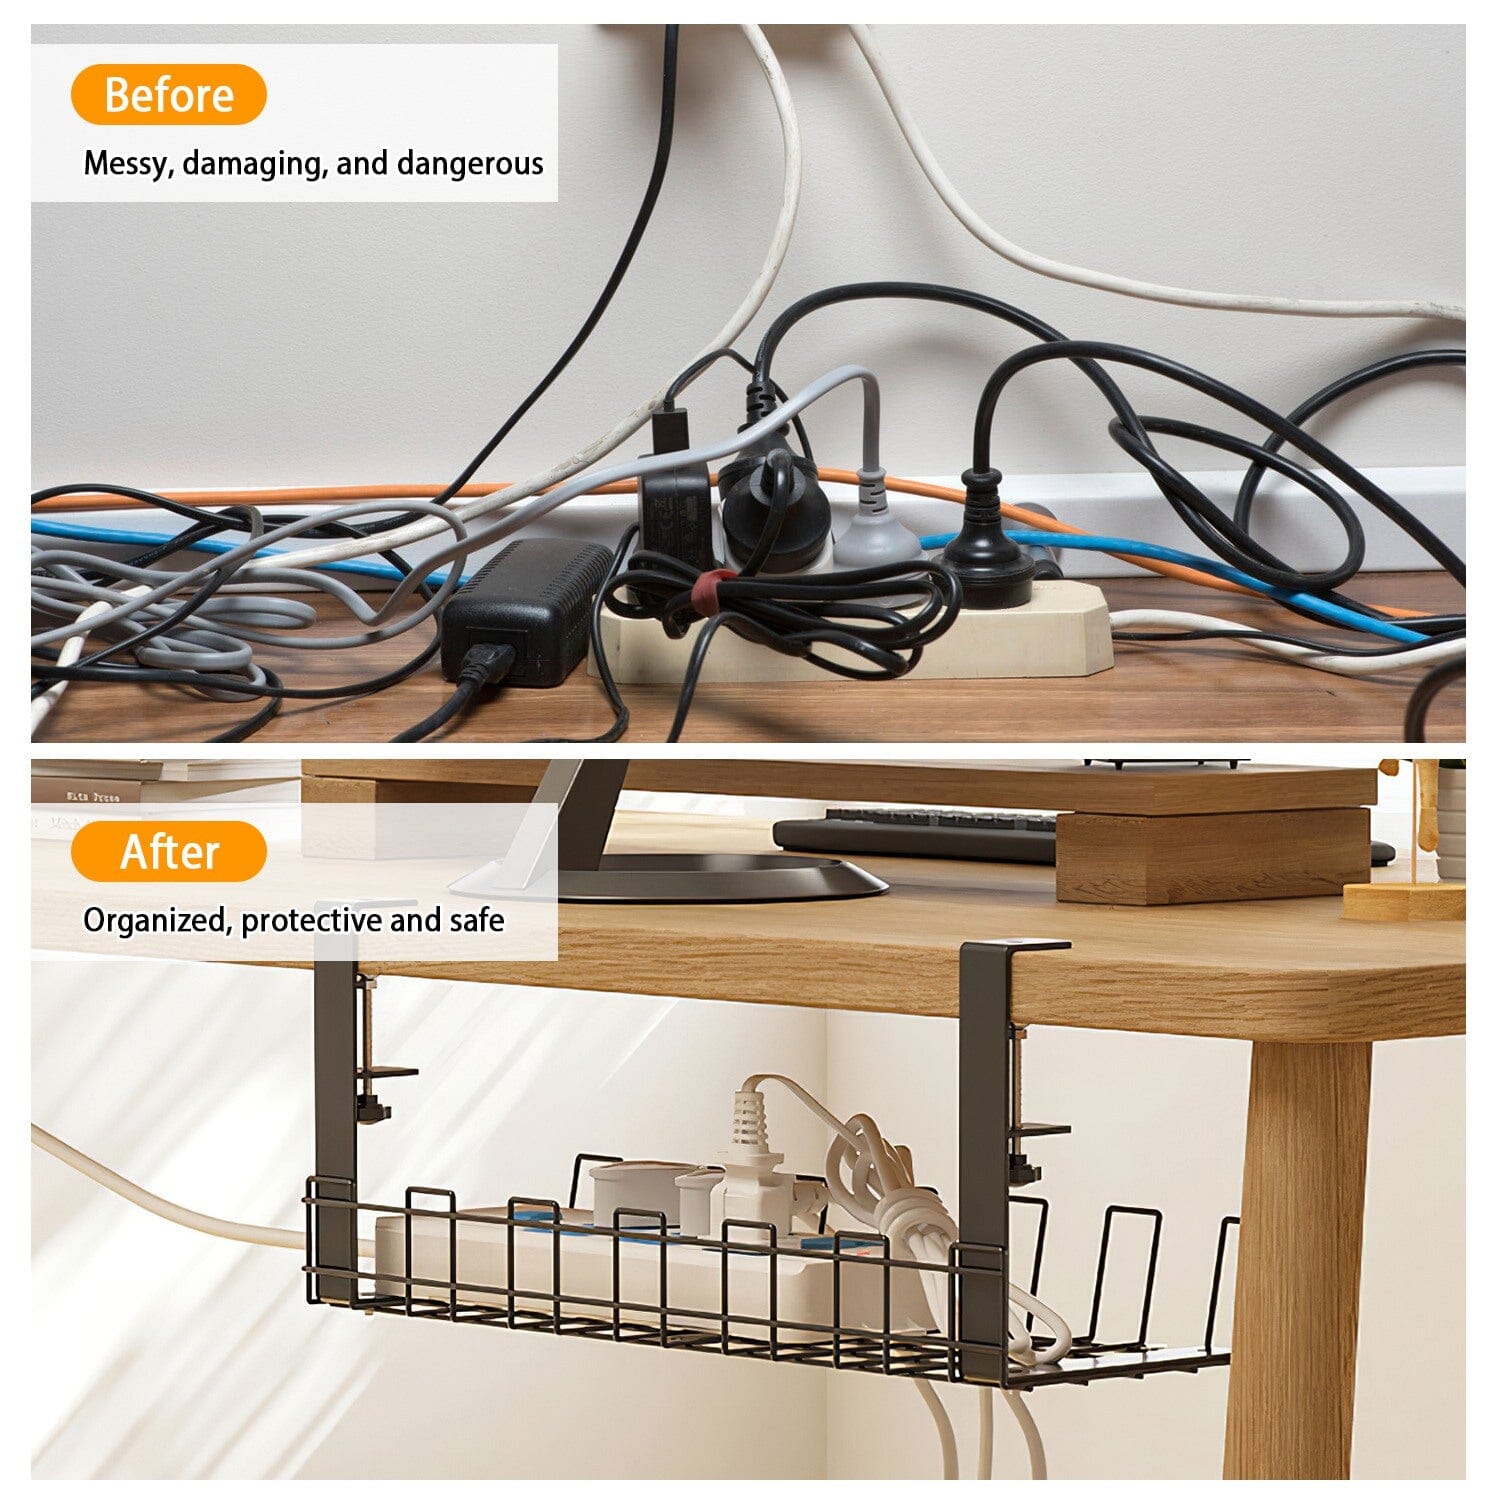 DIY Wire Organizer For Desk or Closet